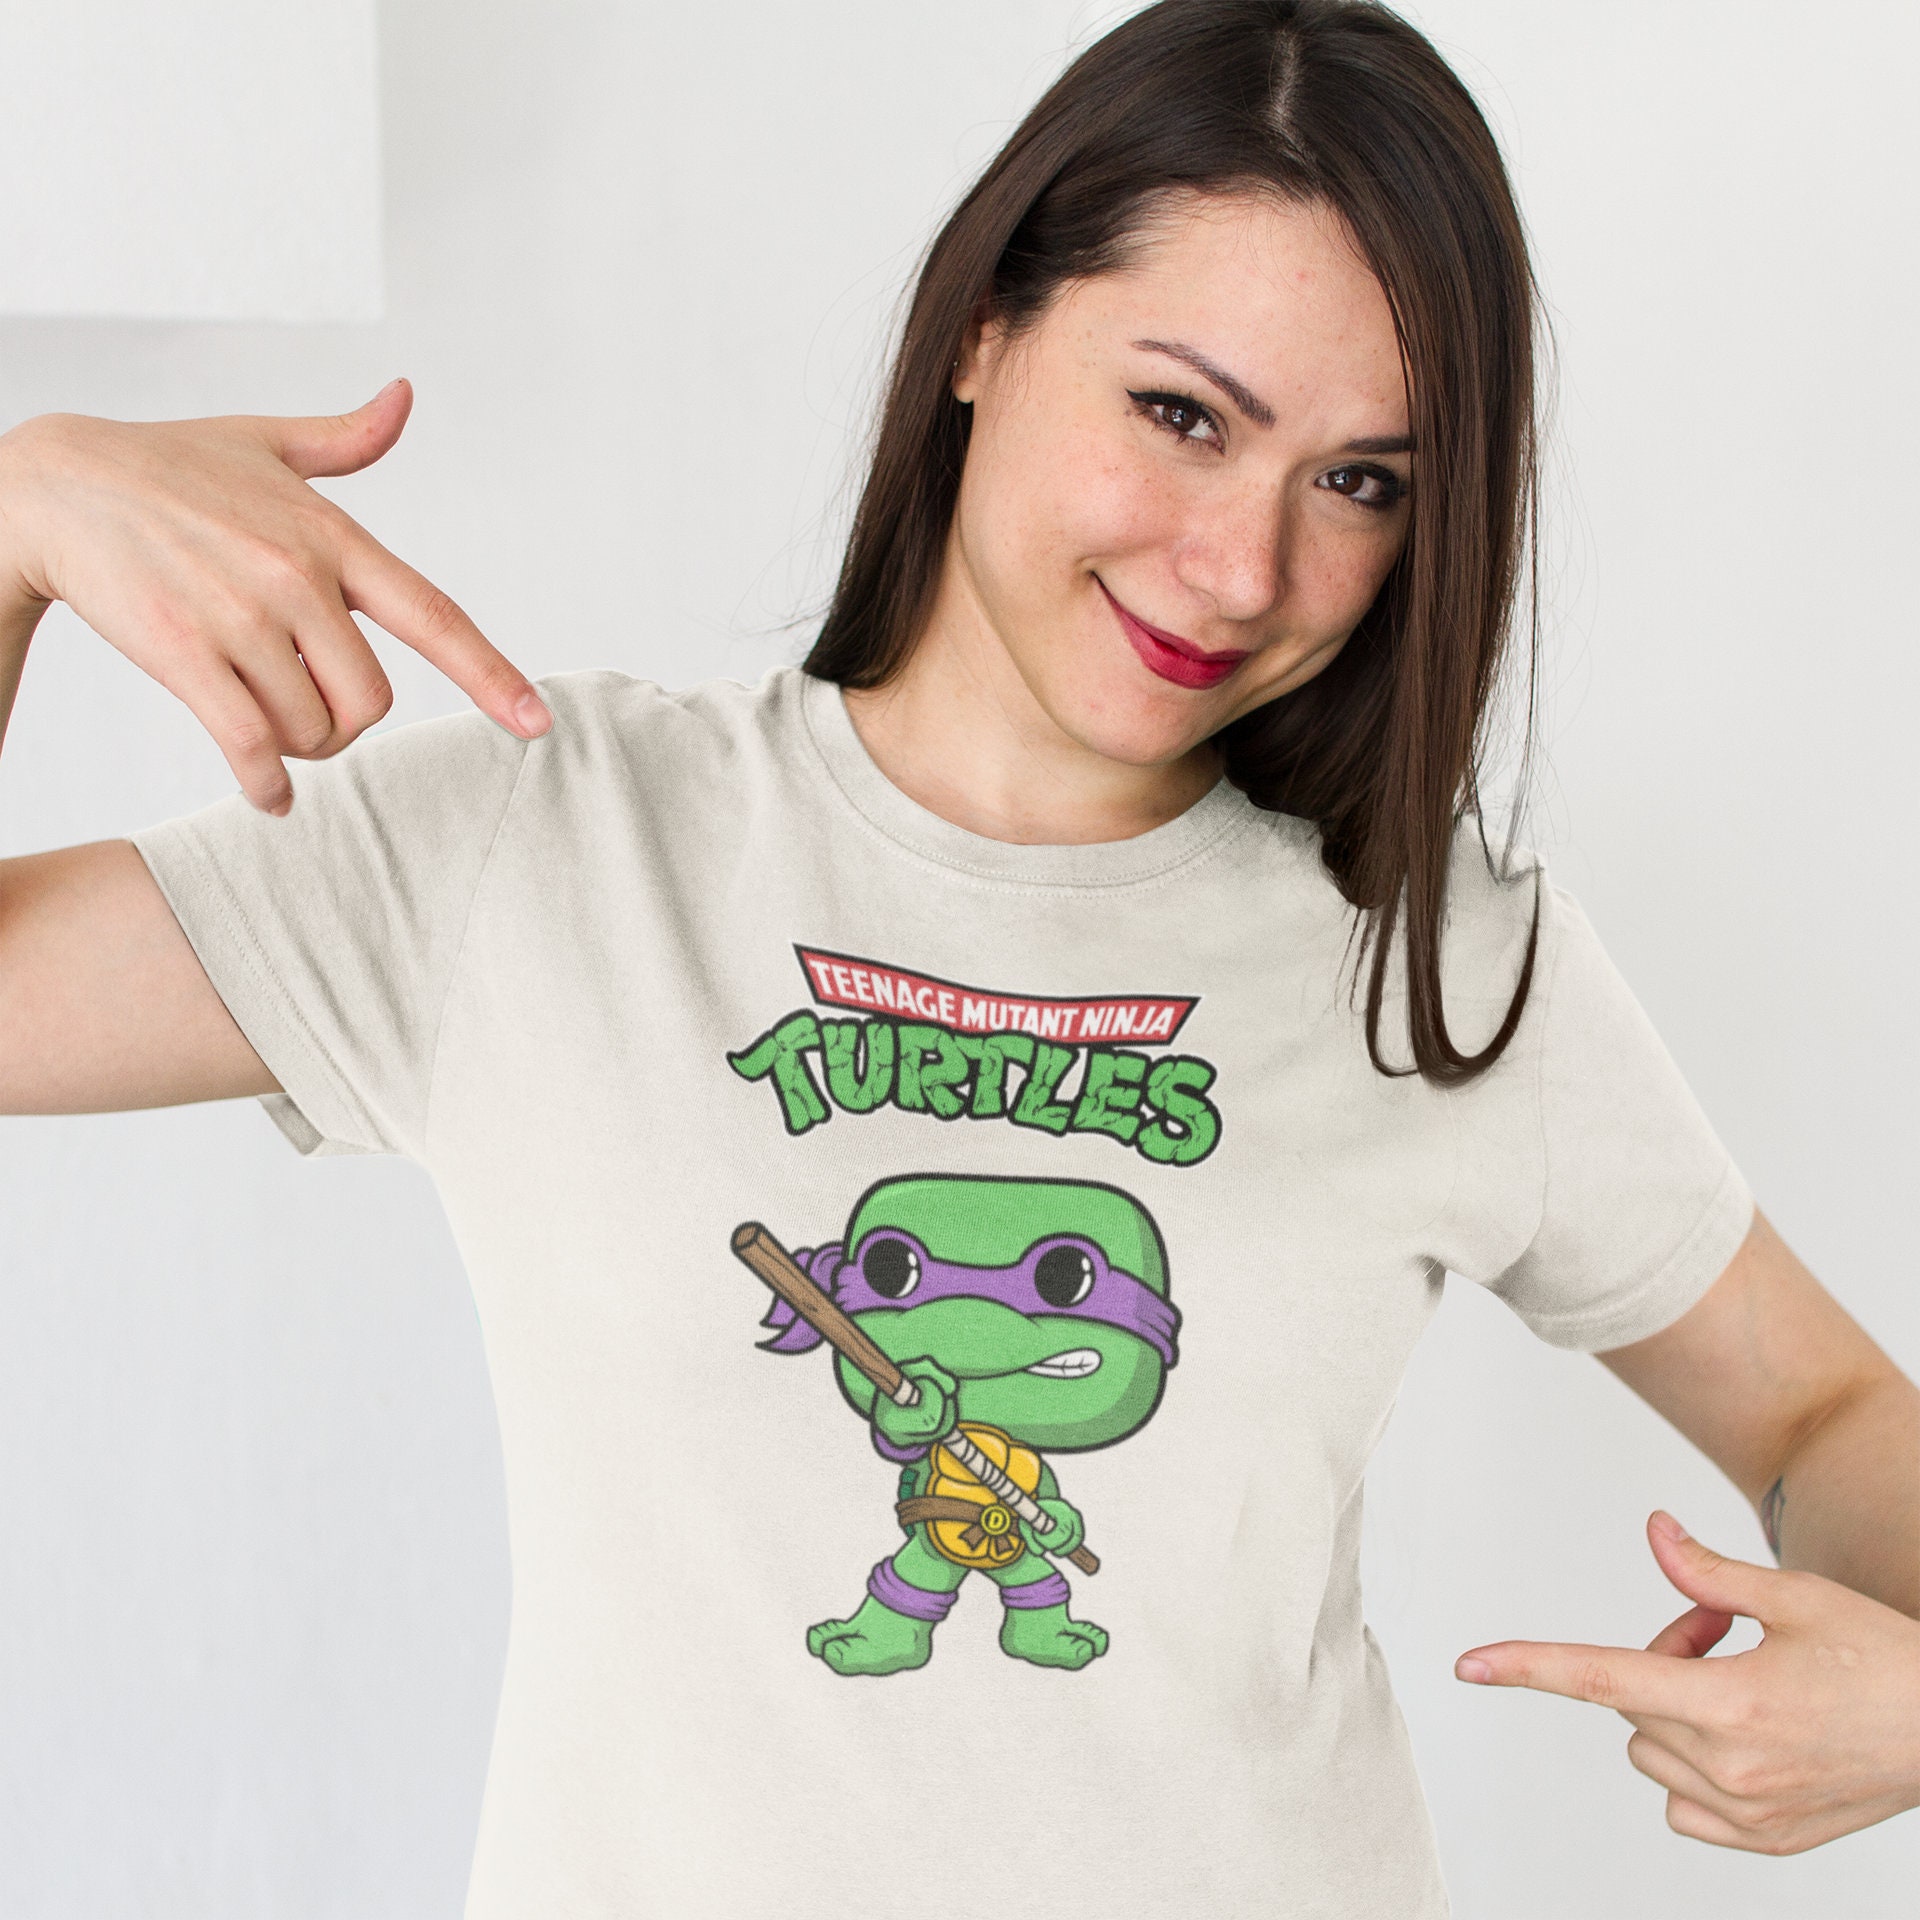 Buy Retro Funko Donatello TMNT Tshirt Online in India 